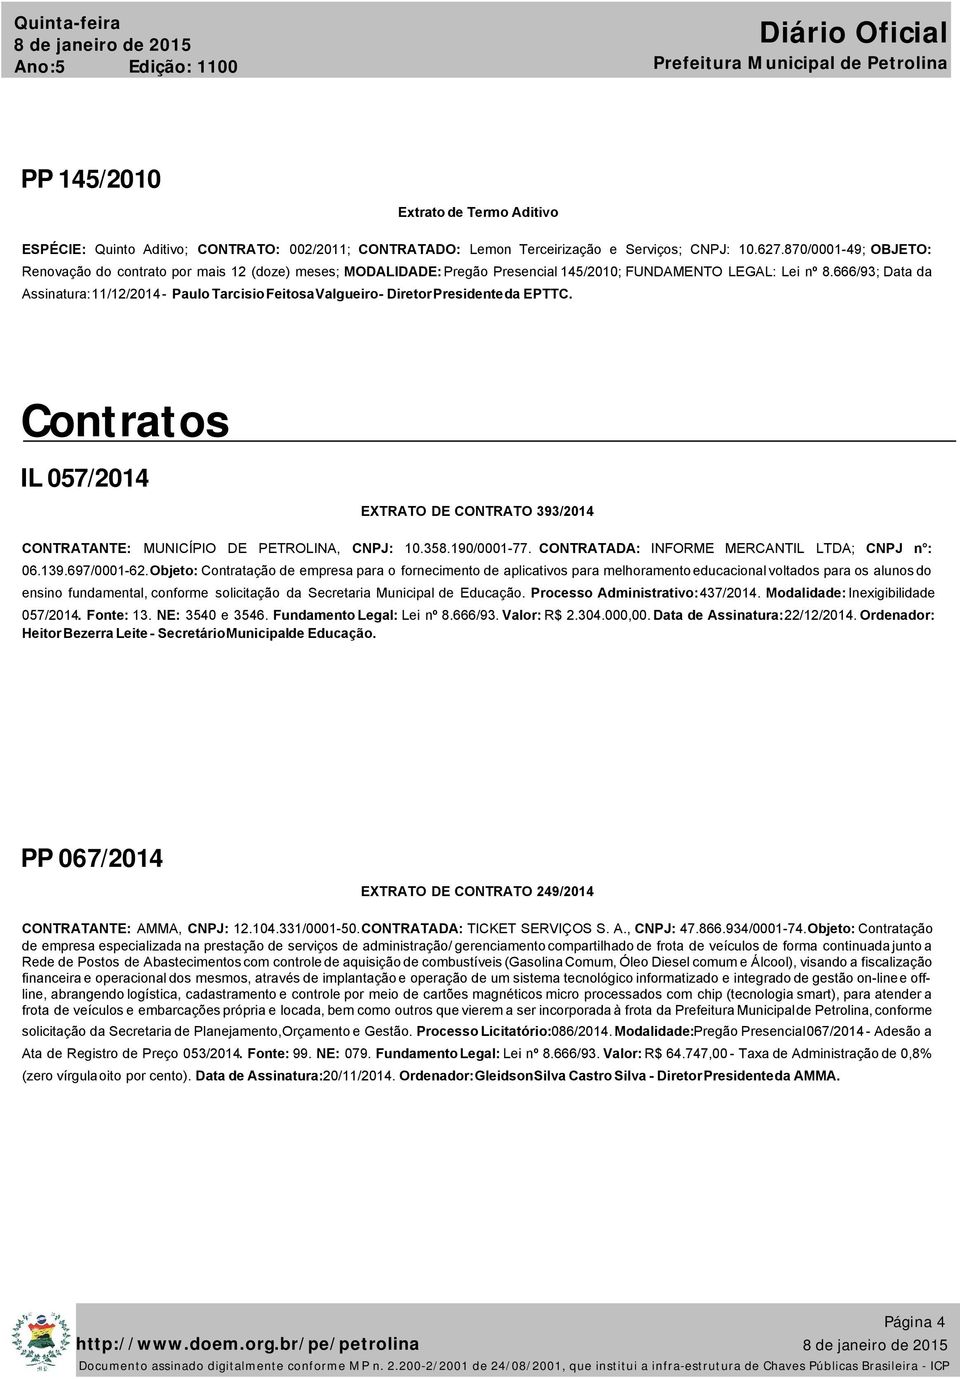 666/93; Data da Assinatura: 11/12/2014 - Paulo Tarcisio Feitosa Valgueiro - Diretor Presidente da EPTTC.